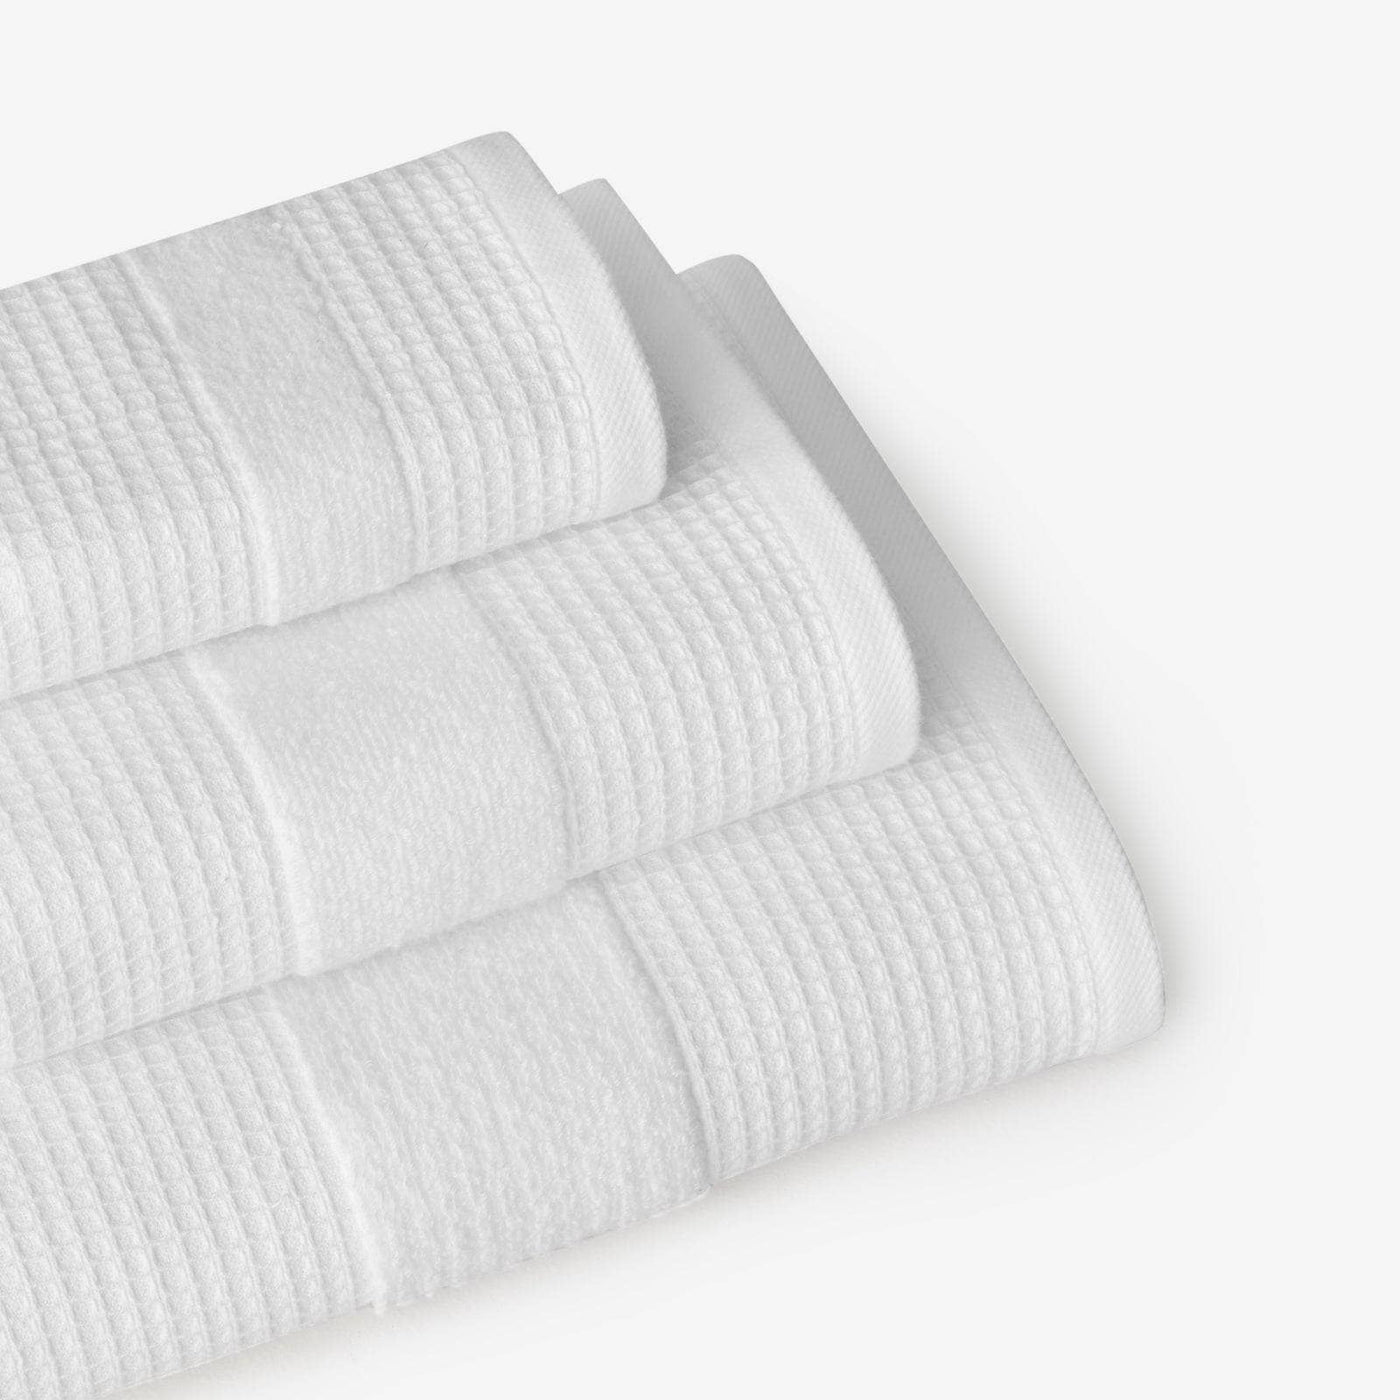 Airsense Waffle Set of 2 100% Turkish Cotton Hand Towels, White Hand Towels sazy.com